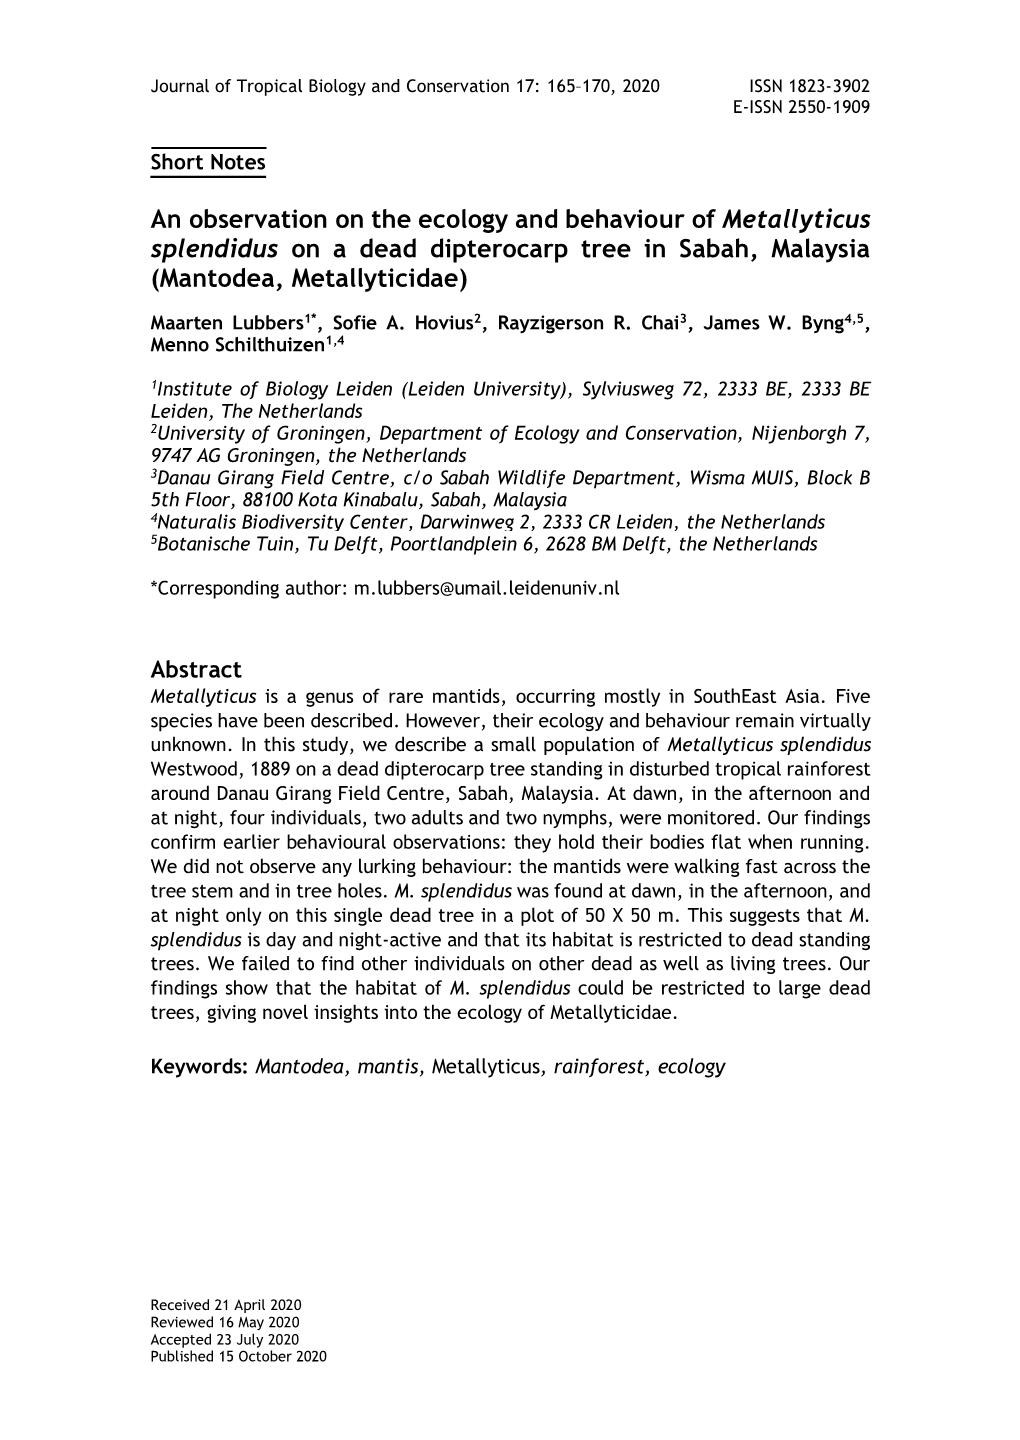 An Observation on the Ecology and Behaviour of Metallyticus Splendidus on a Dead Dipterocarp Tree in Sabah, Malaysia (Mantodea, Metallyticidae)